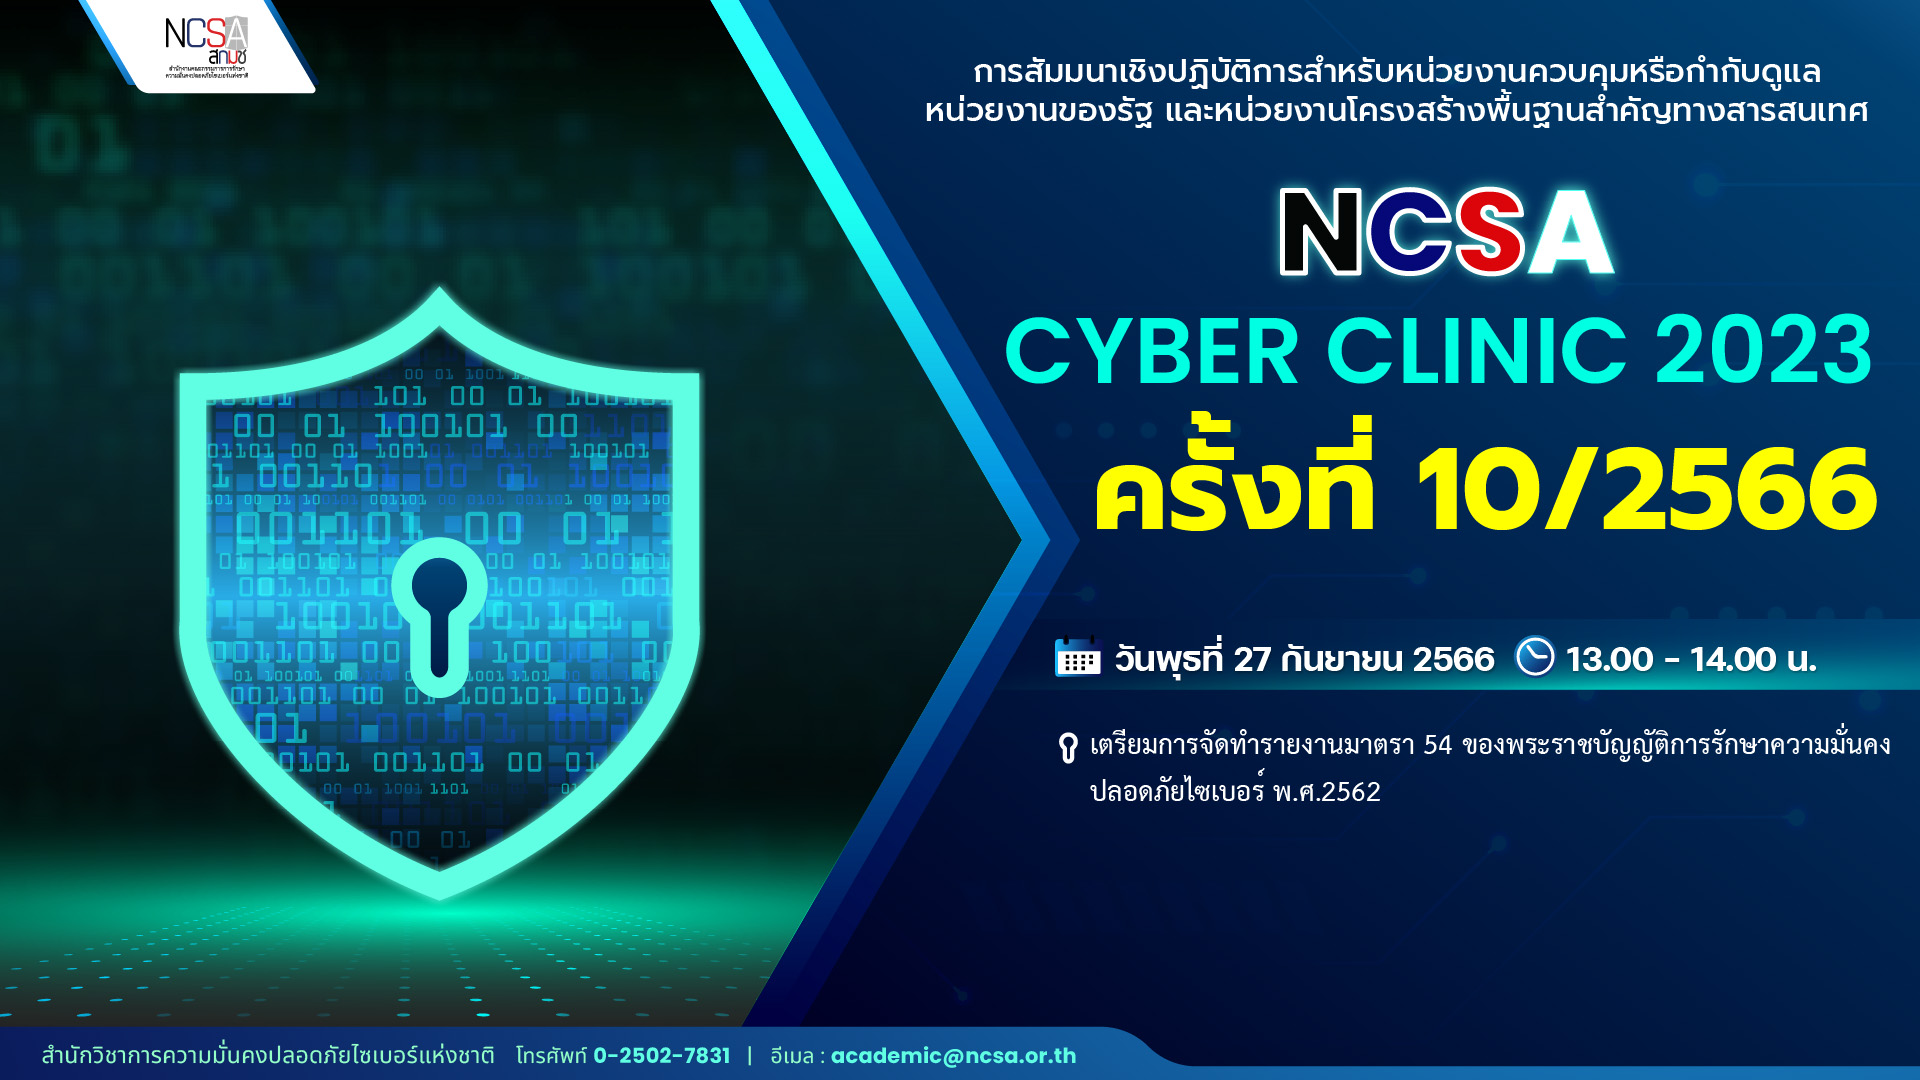 NCSA Cyber Clinic 2023 ครั้งที่ 10/2566